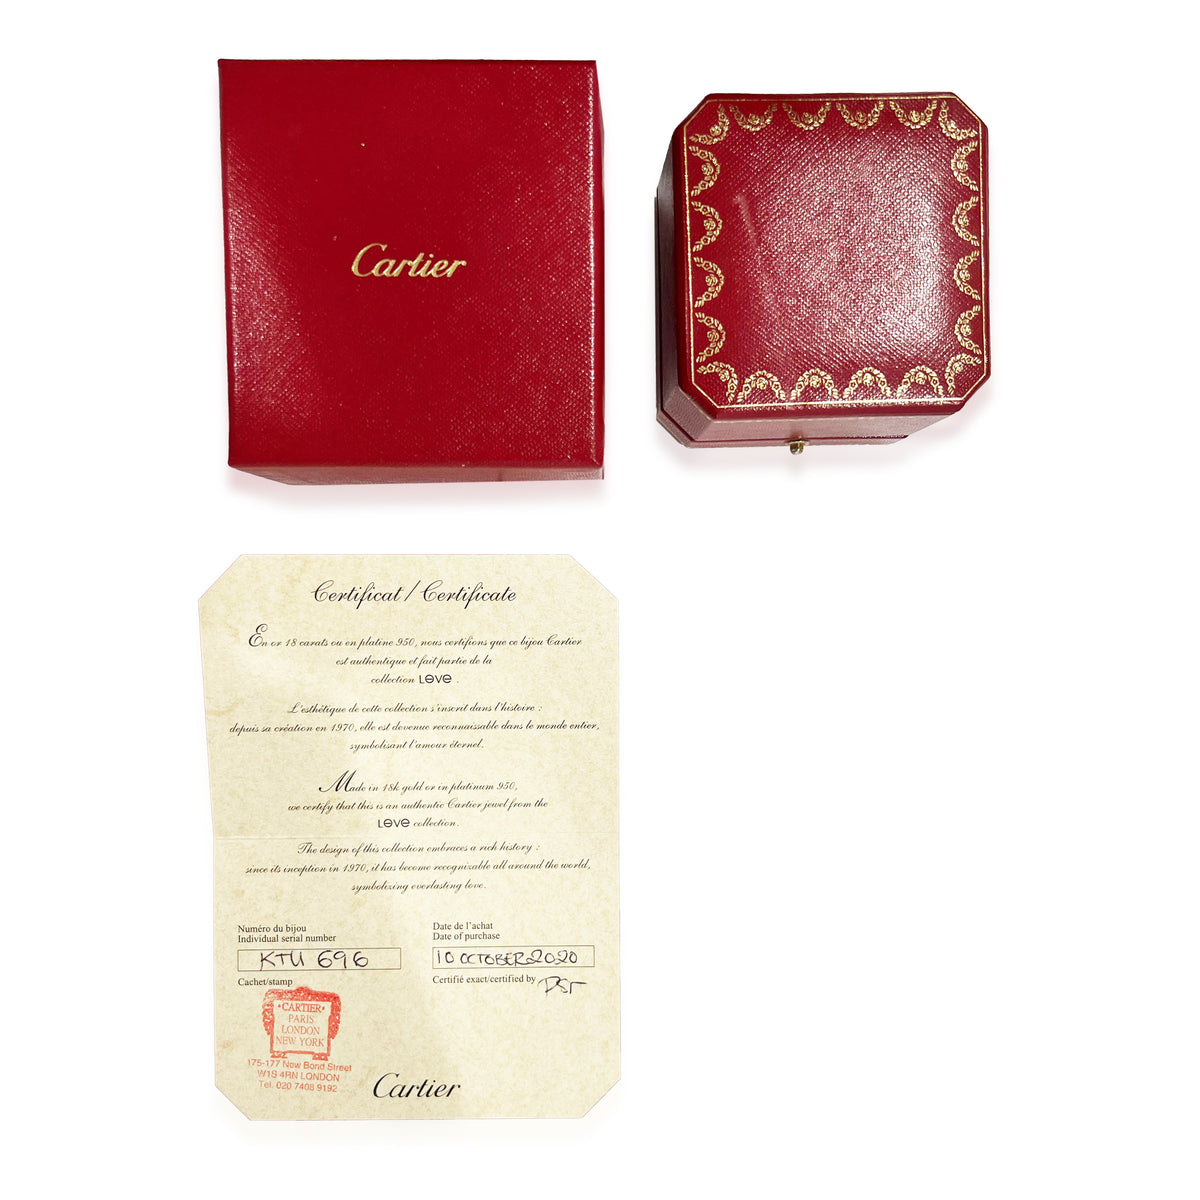 Cartier London New Bond Street: fine jewelry, watches, accessories at  175-177 New Bond Street - Cartier